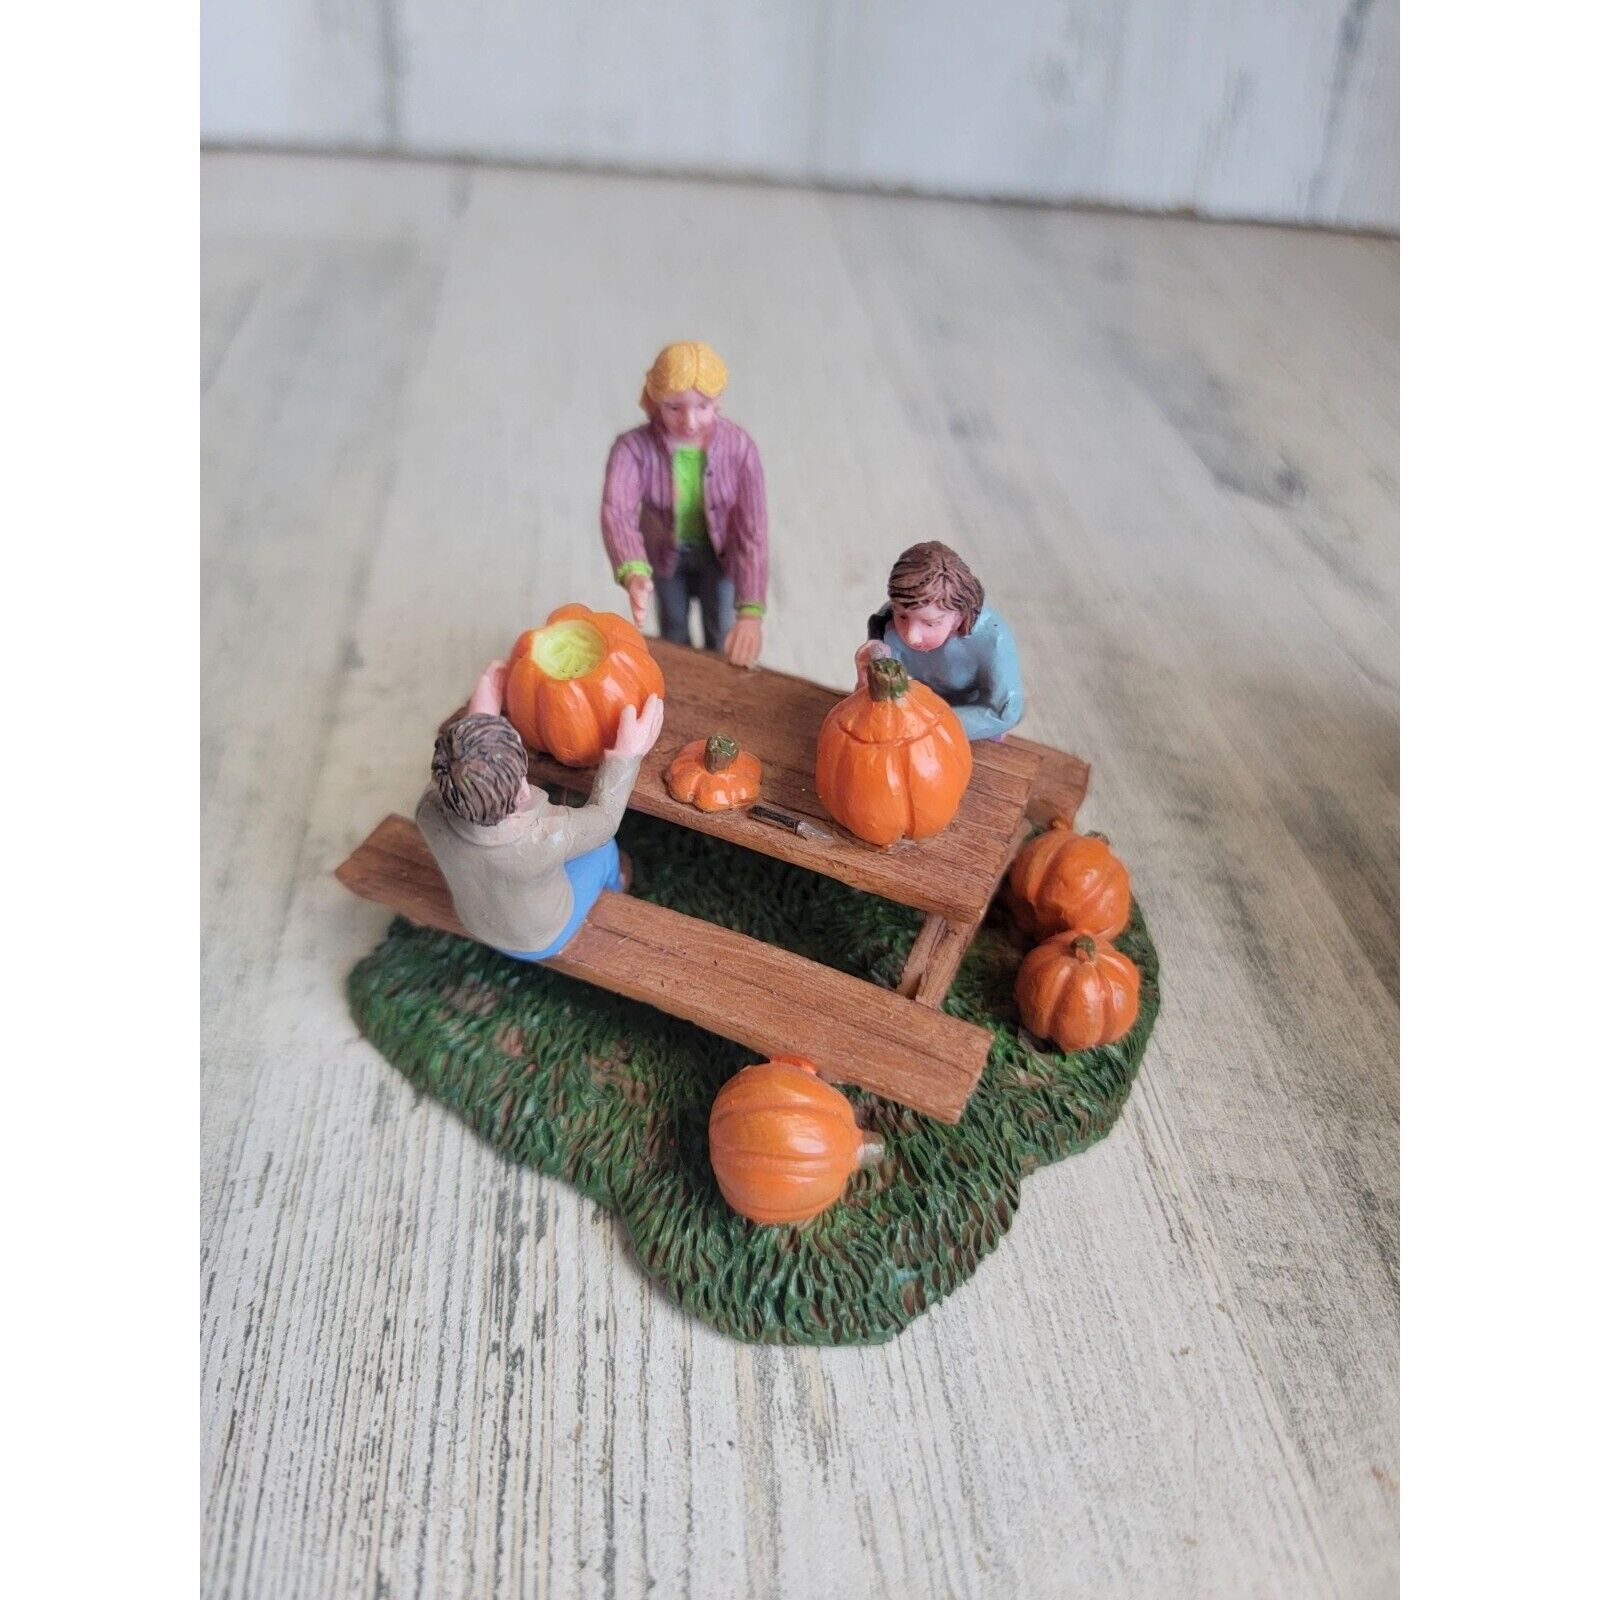 Lemax vintage carving pumpkin Halloween Village accessory